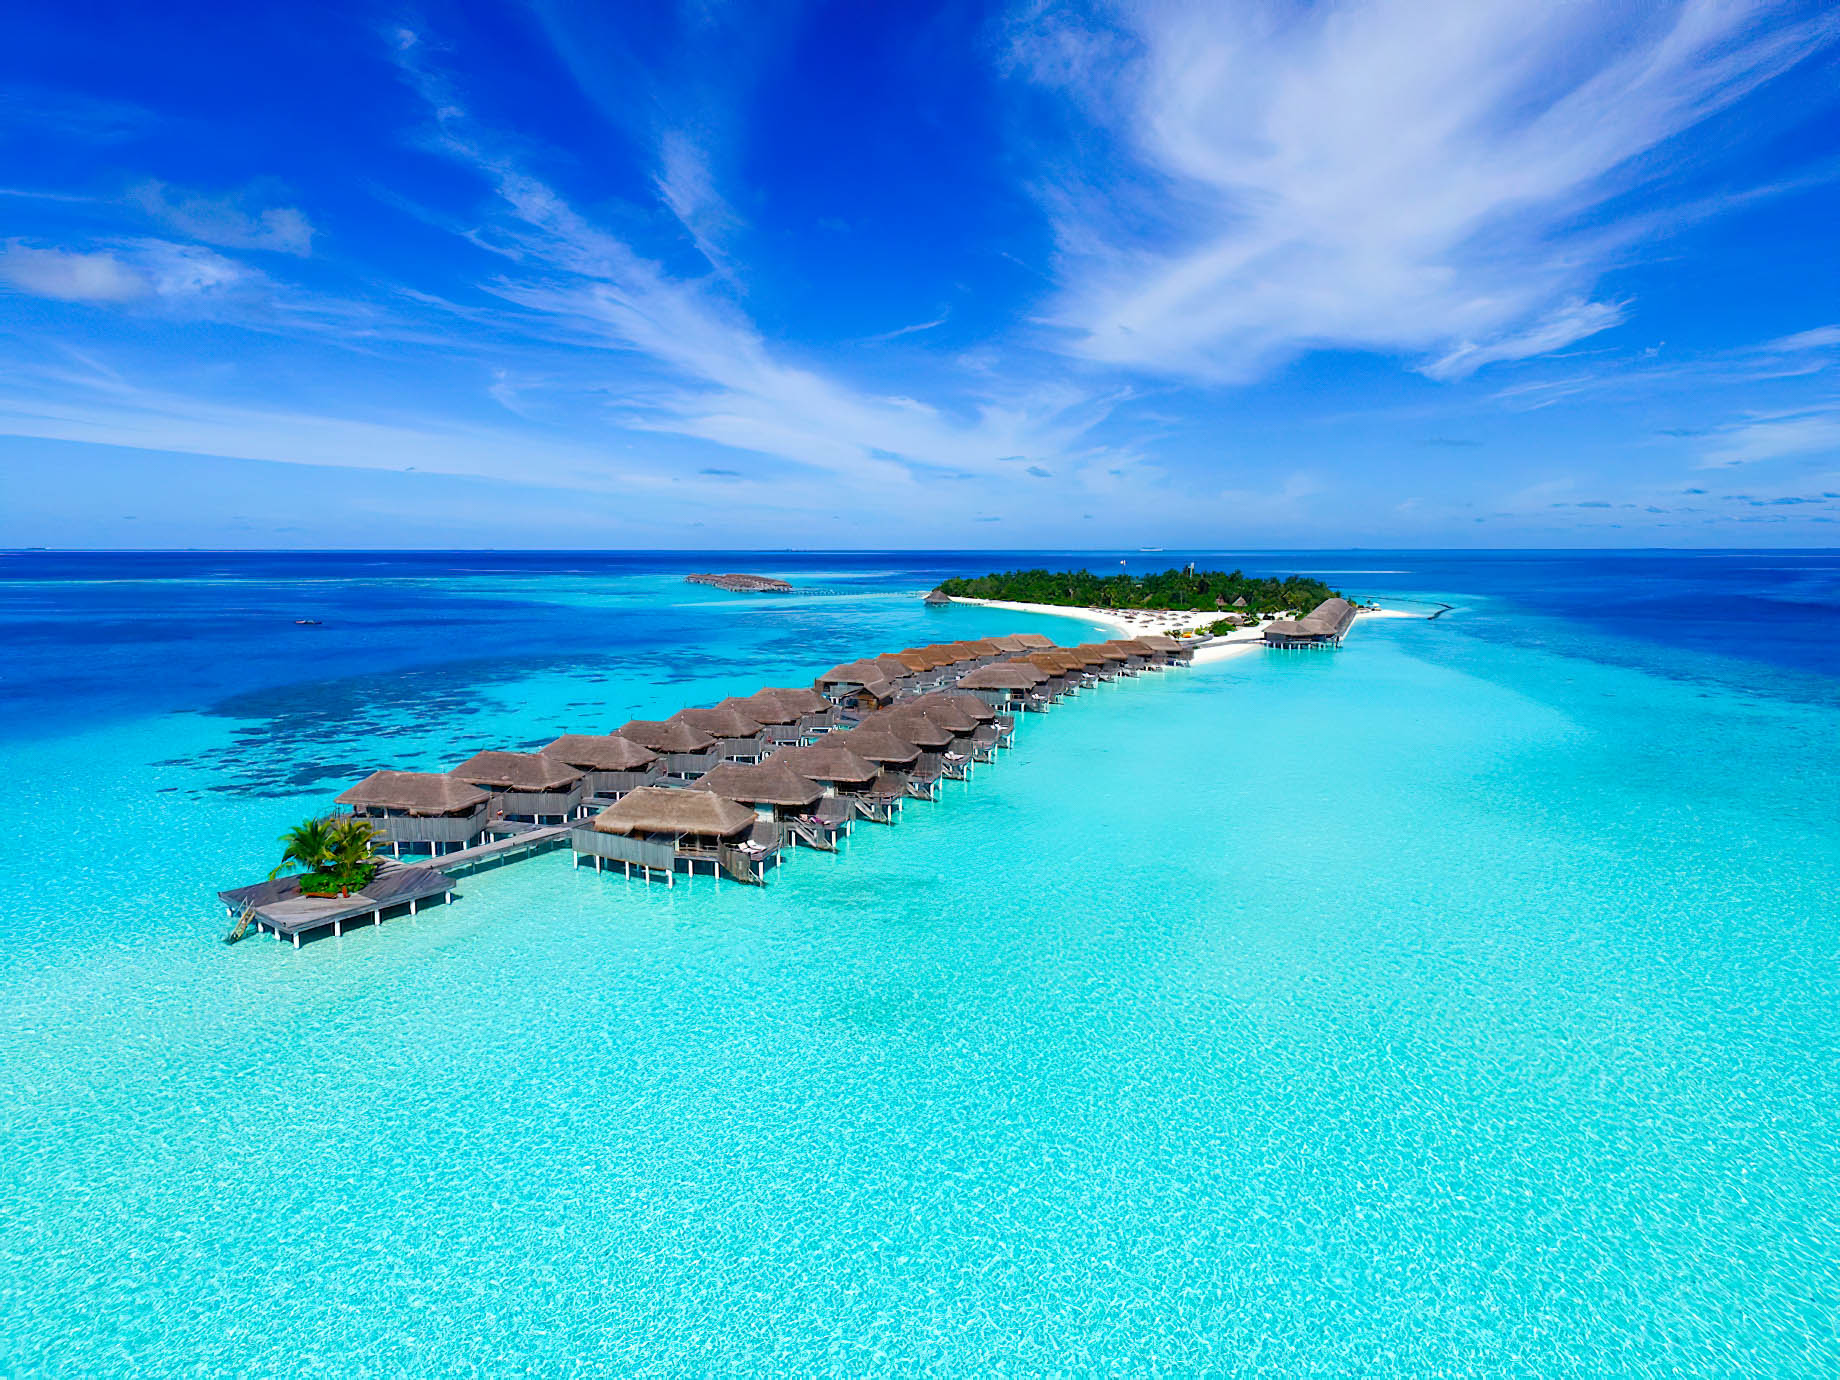 Constance Moofushi Resort - South Ari Atoll, Maldives - Overwater Villas Aerial View